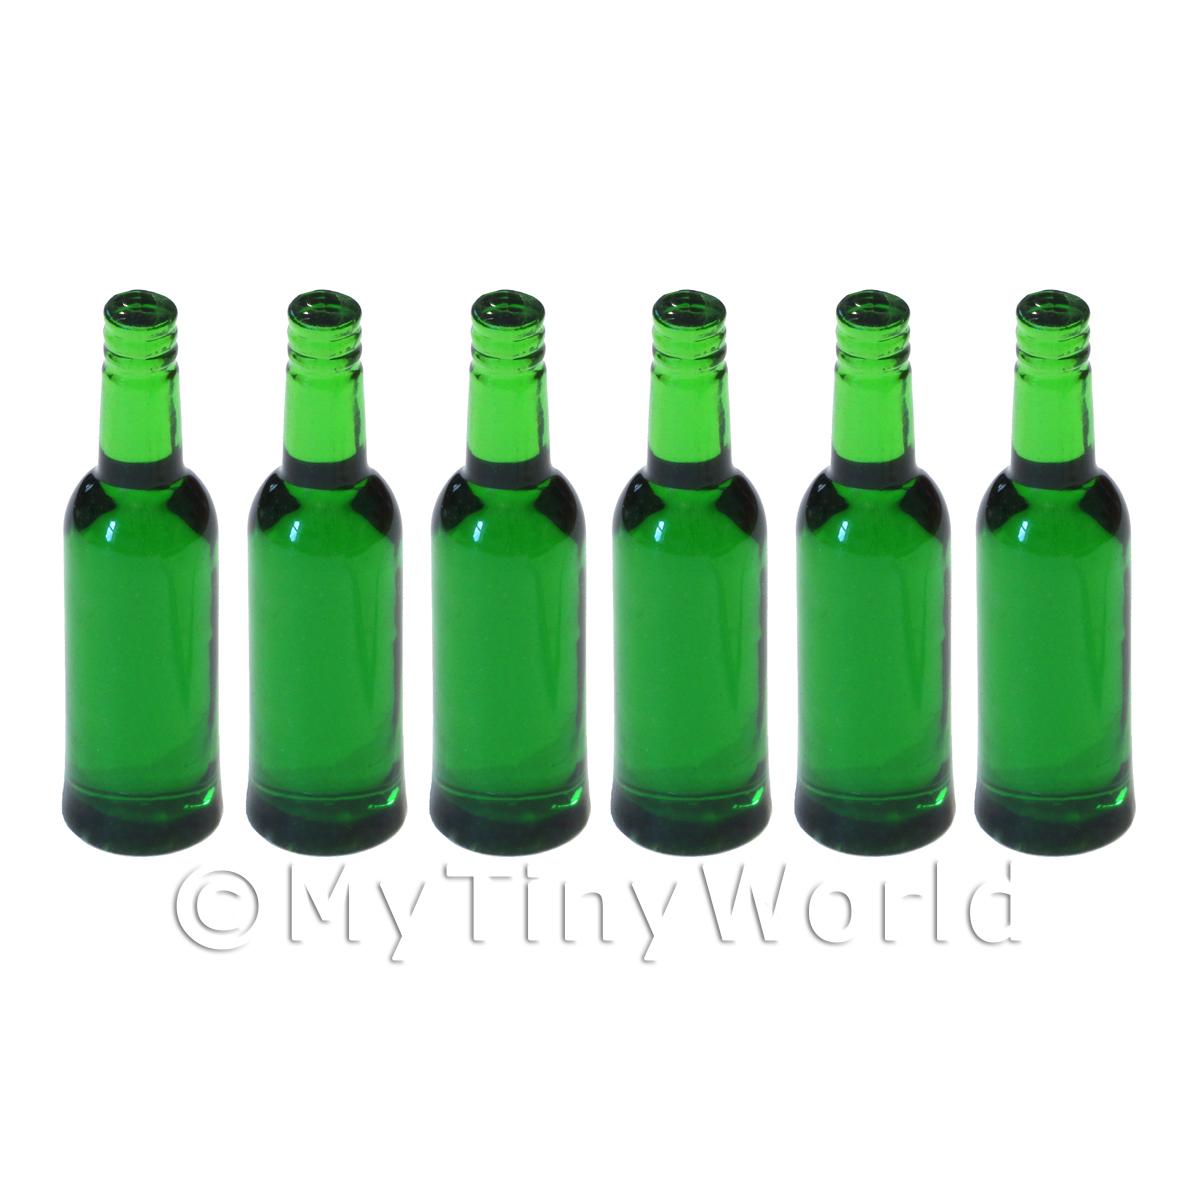 1/12 Scale Dolls House Miniatures  | Set of 6 Bottle Green Dolls House Miniature Resin Wine Bottles